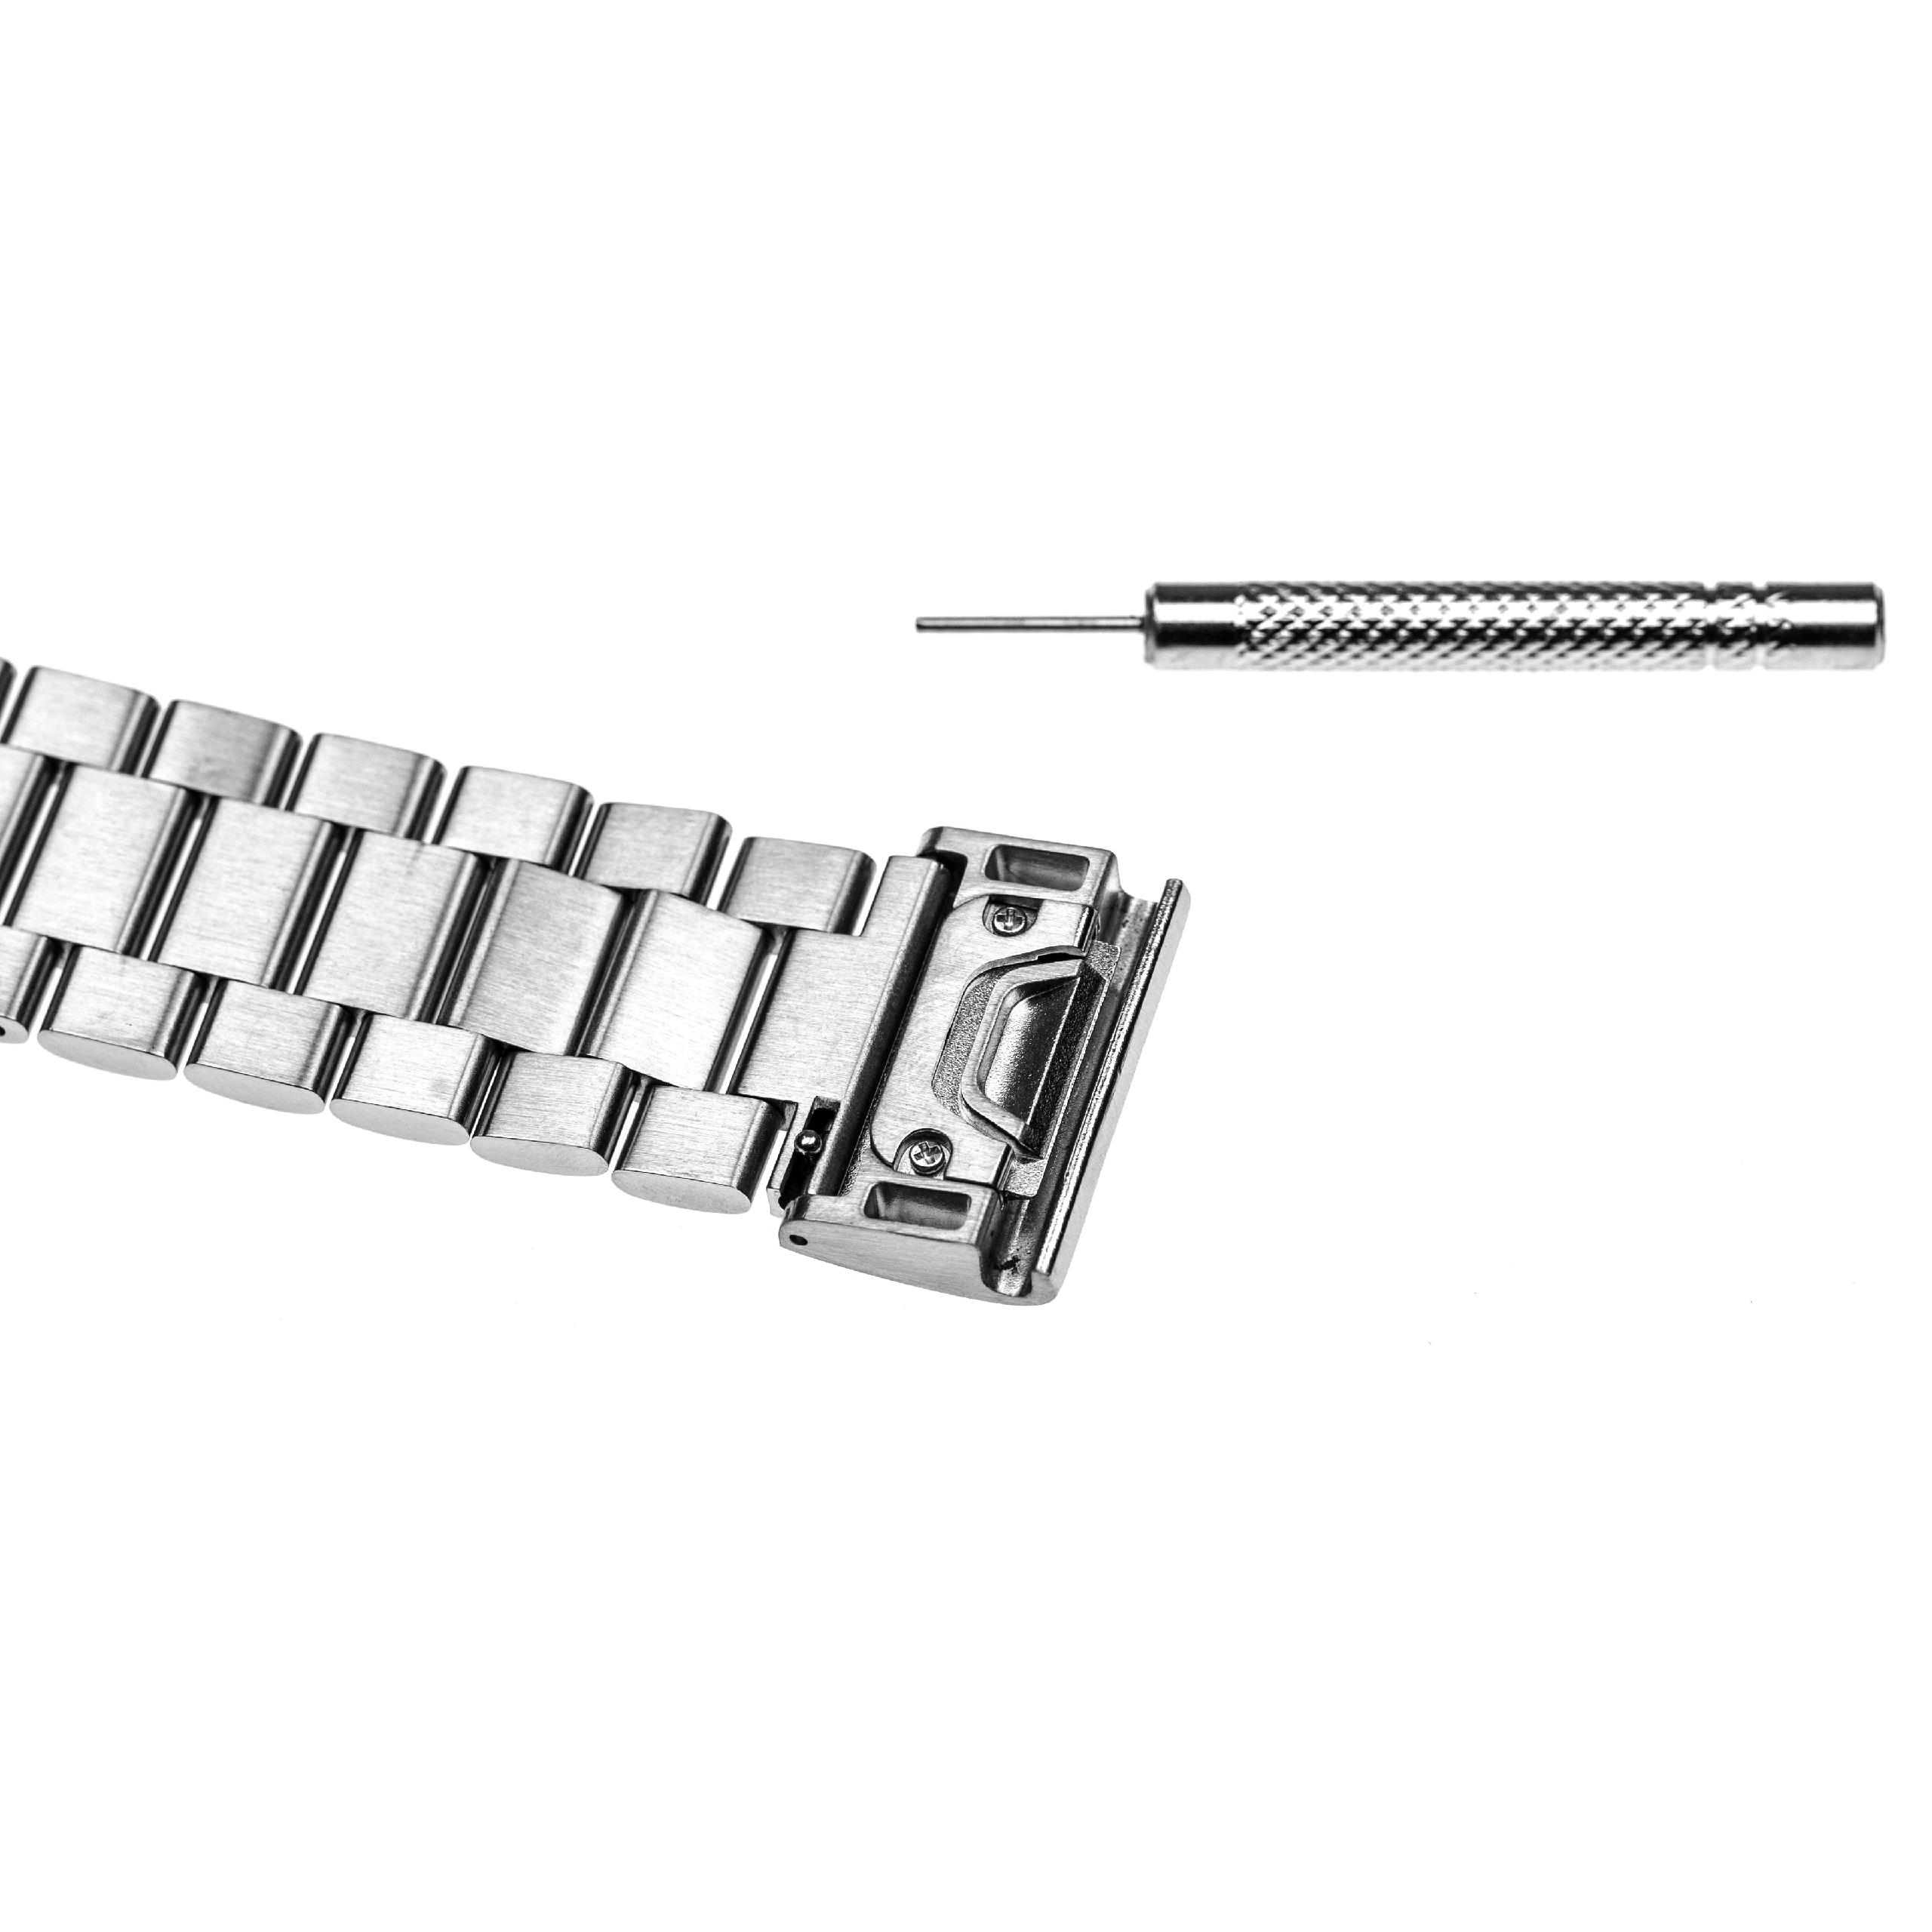 cinturino per Garmin Fenix Smartwatch - 20,4 cm lunghezza, 26mm ampiezza, acciaio inox, argento